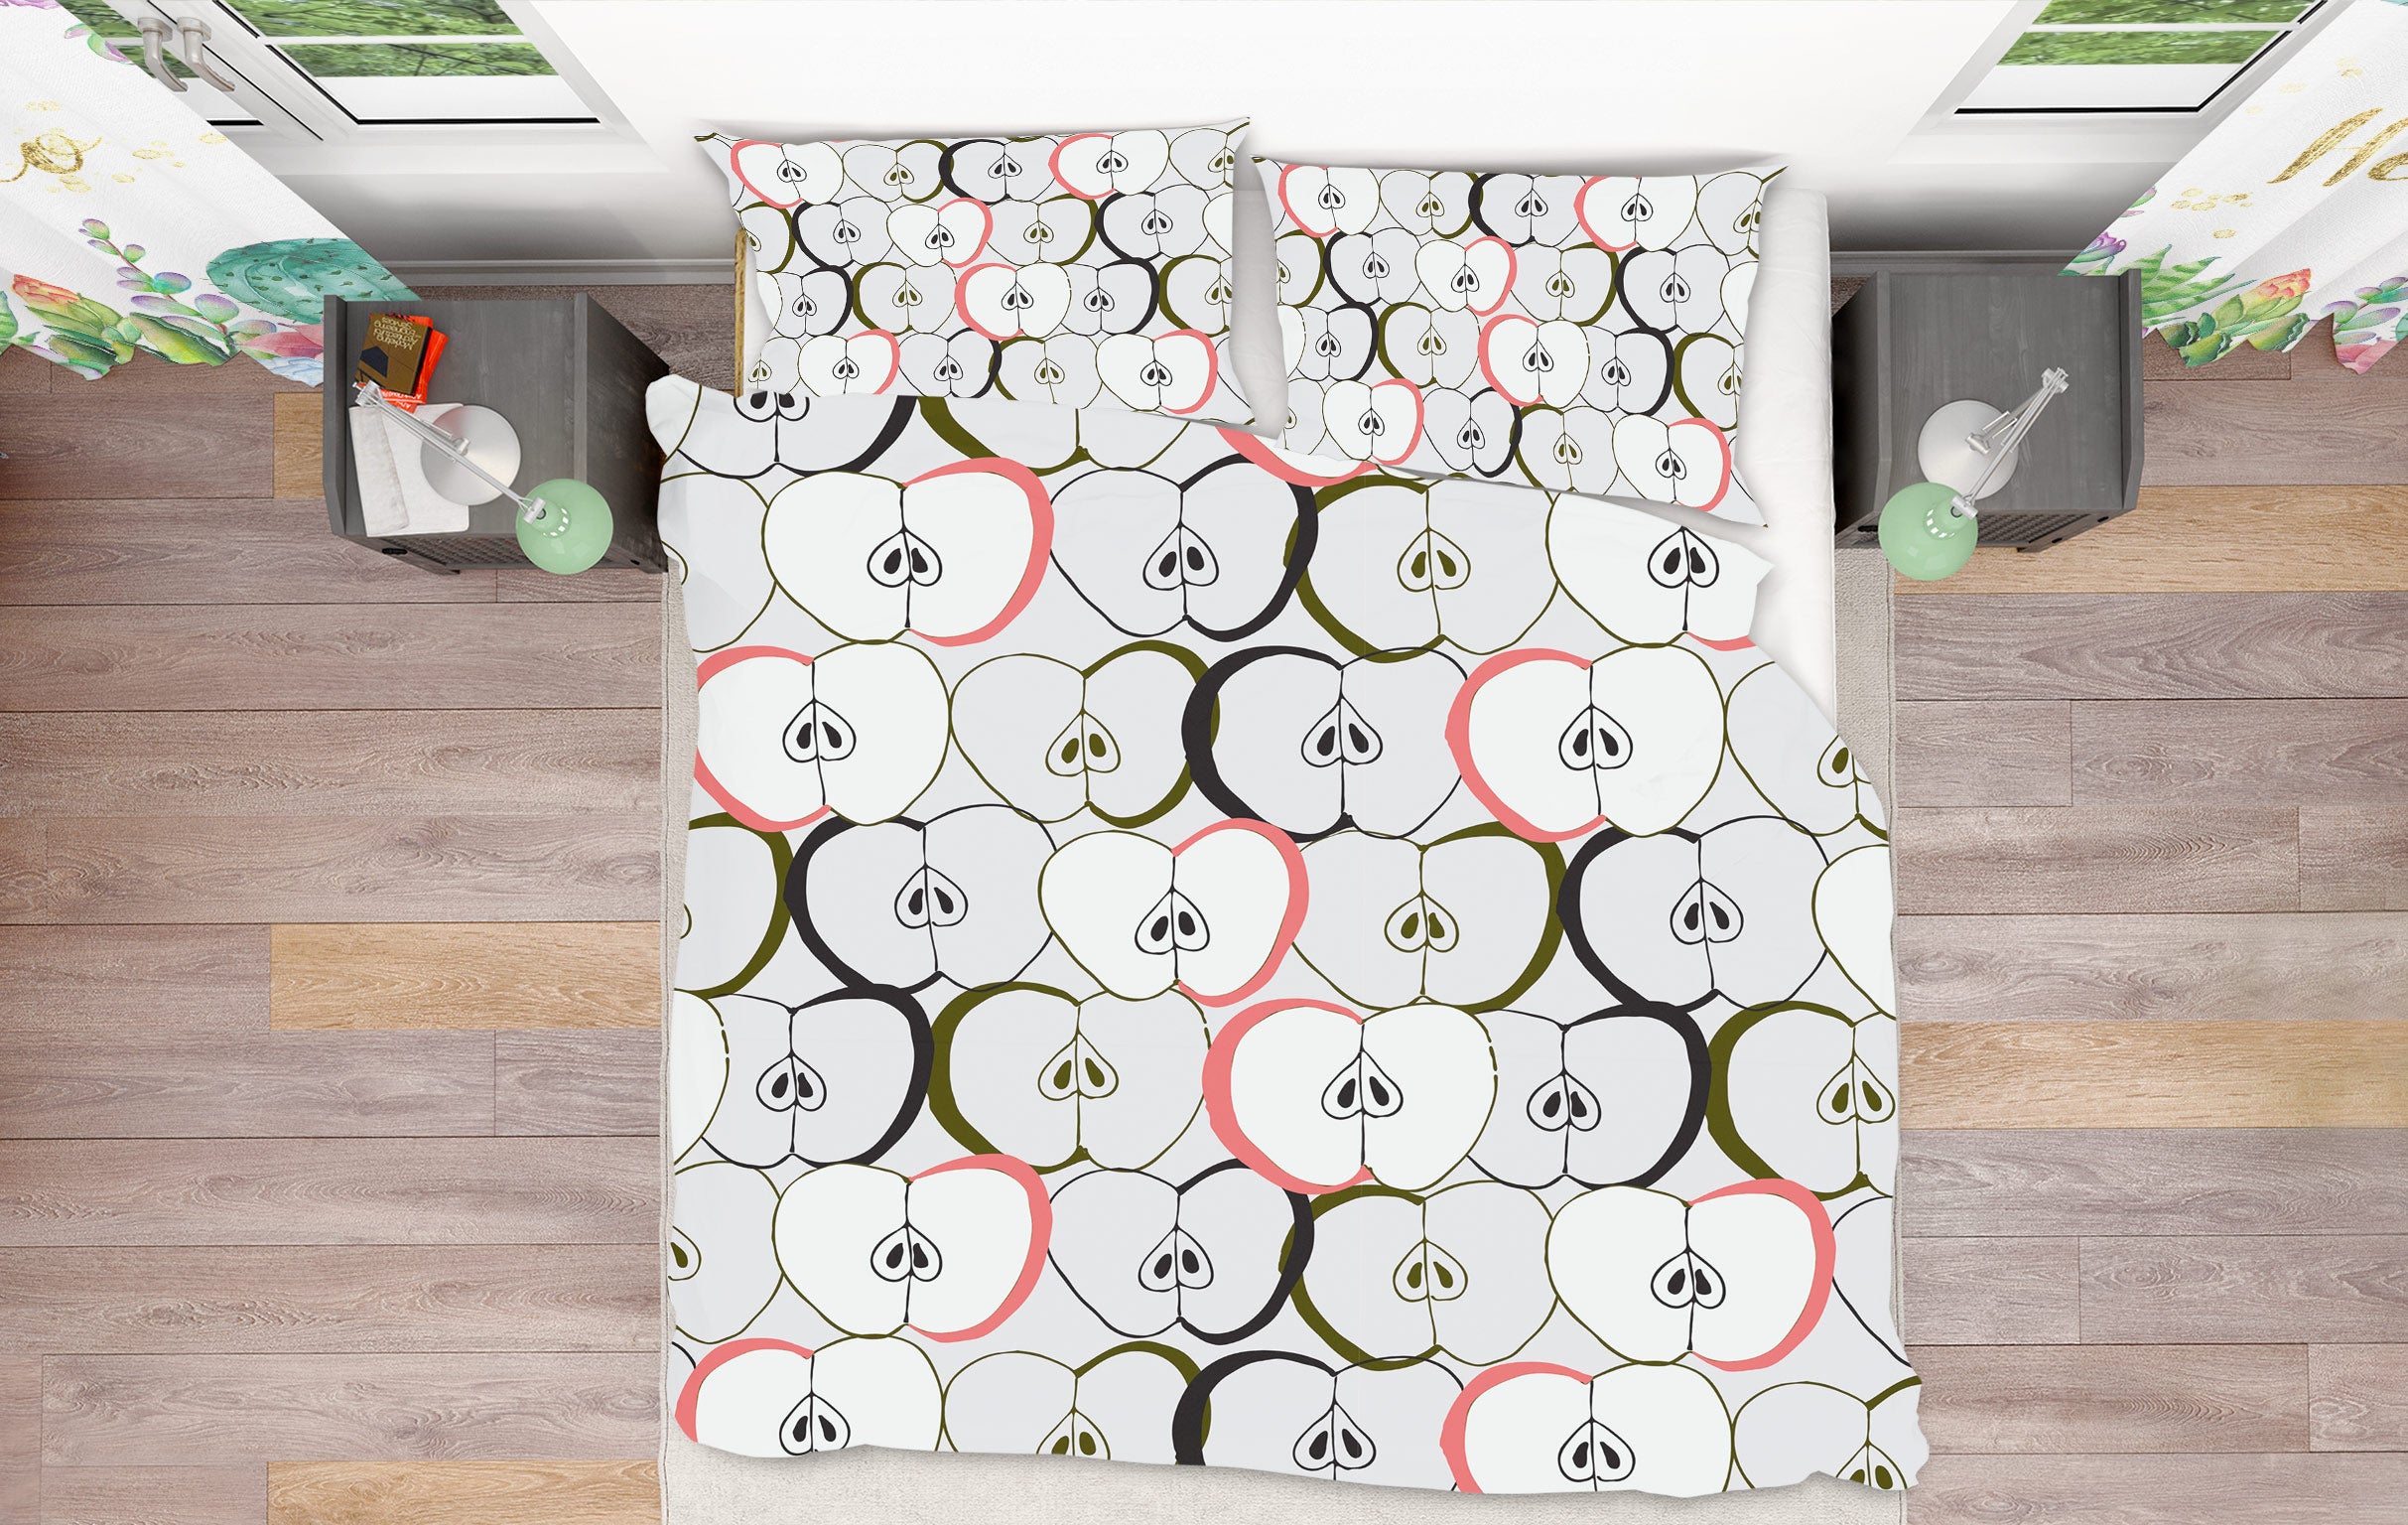 3D Apple Pattern 109151 Kashmira Jayaprakash Bedding Bed Pillowcases Quilt